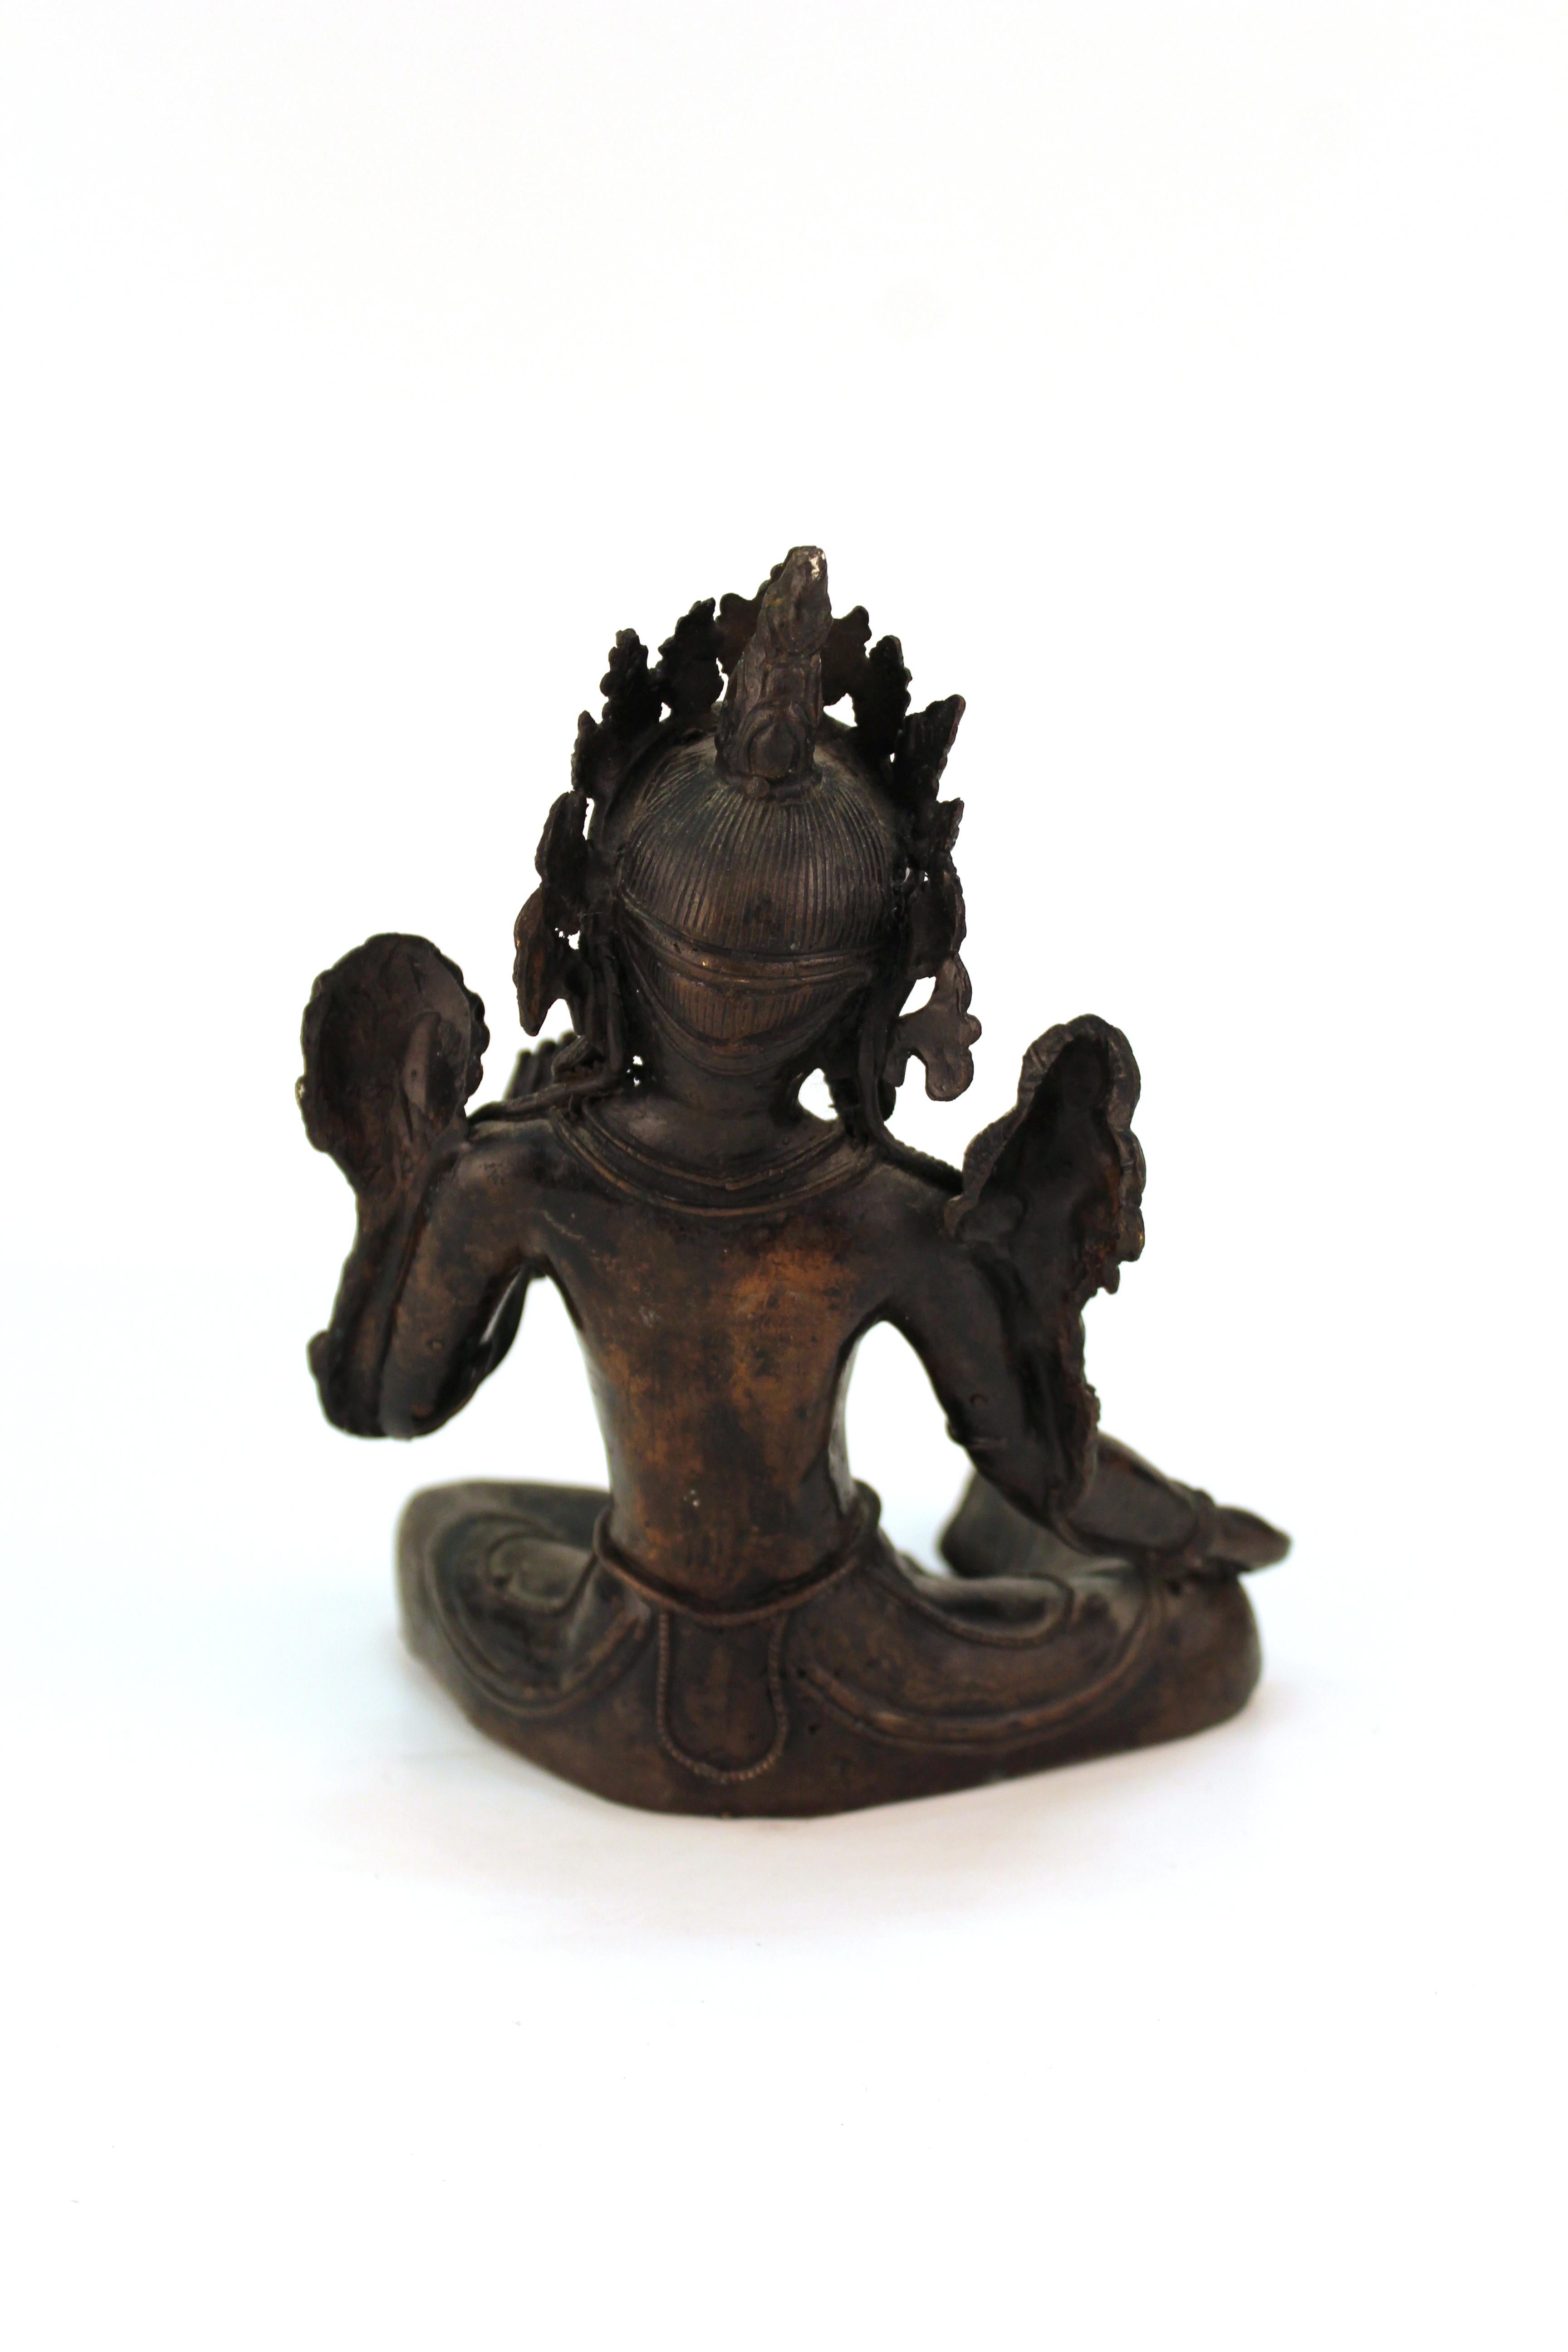 20th Century Tibetan Bronzed Metal Buddhist Sculpture of the Seated Bodhisattva Tara